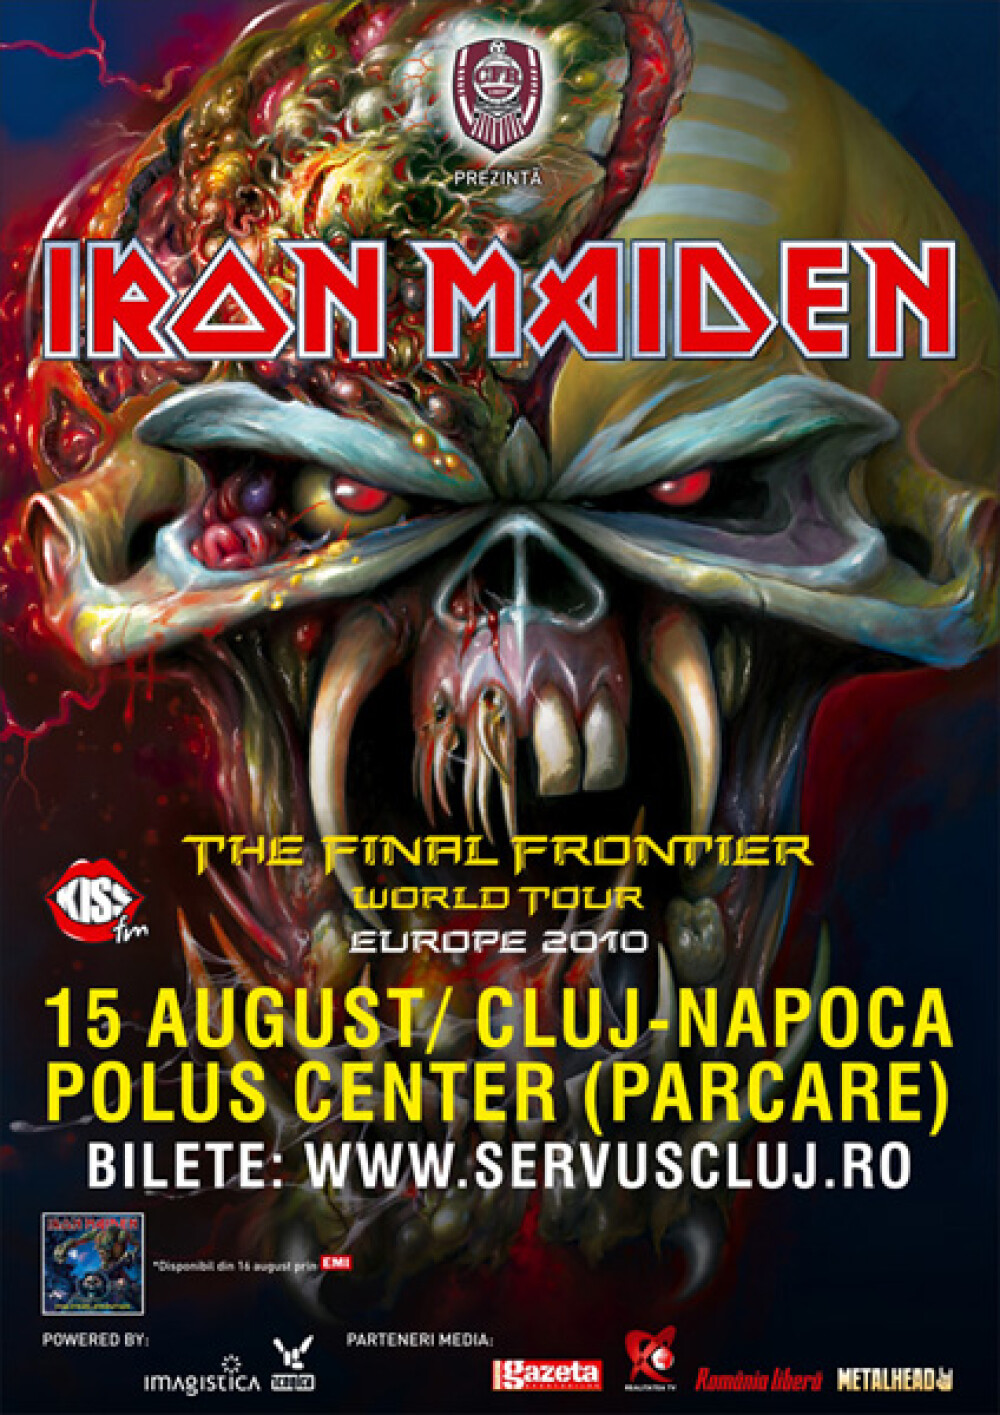 Rockerii de la Iron Maiden vor o maseza profesionista si 7 feluri de bere - Imaginea 3